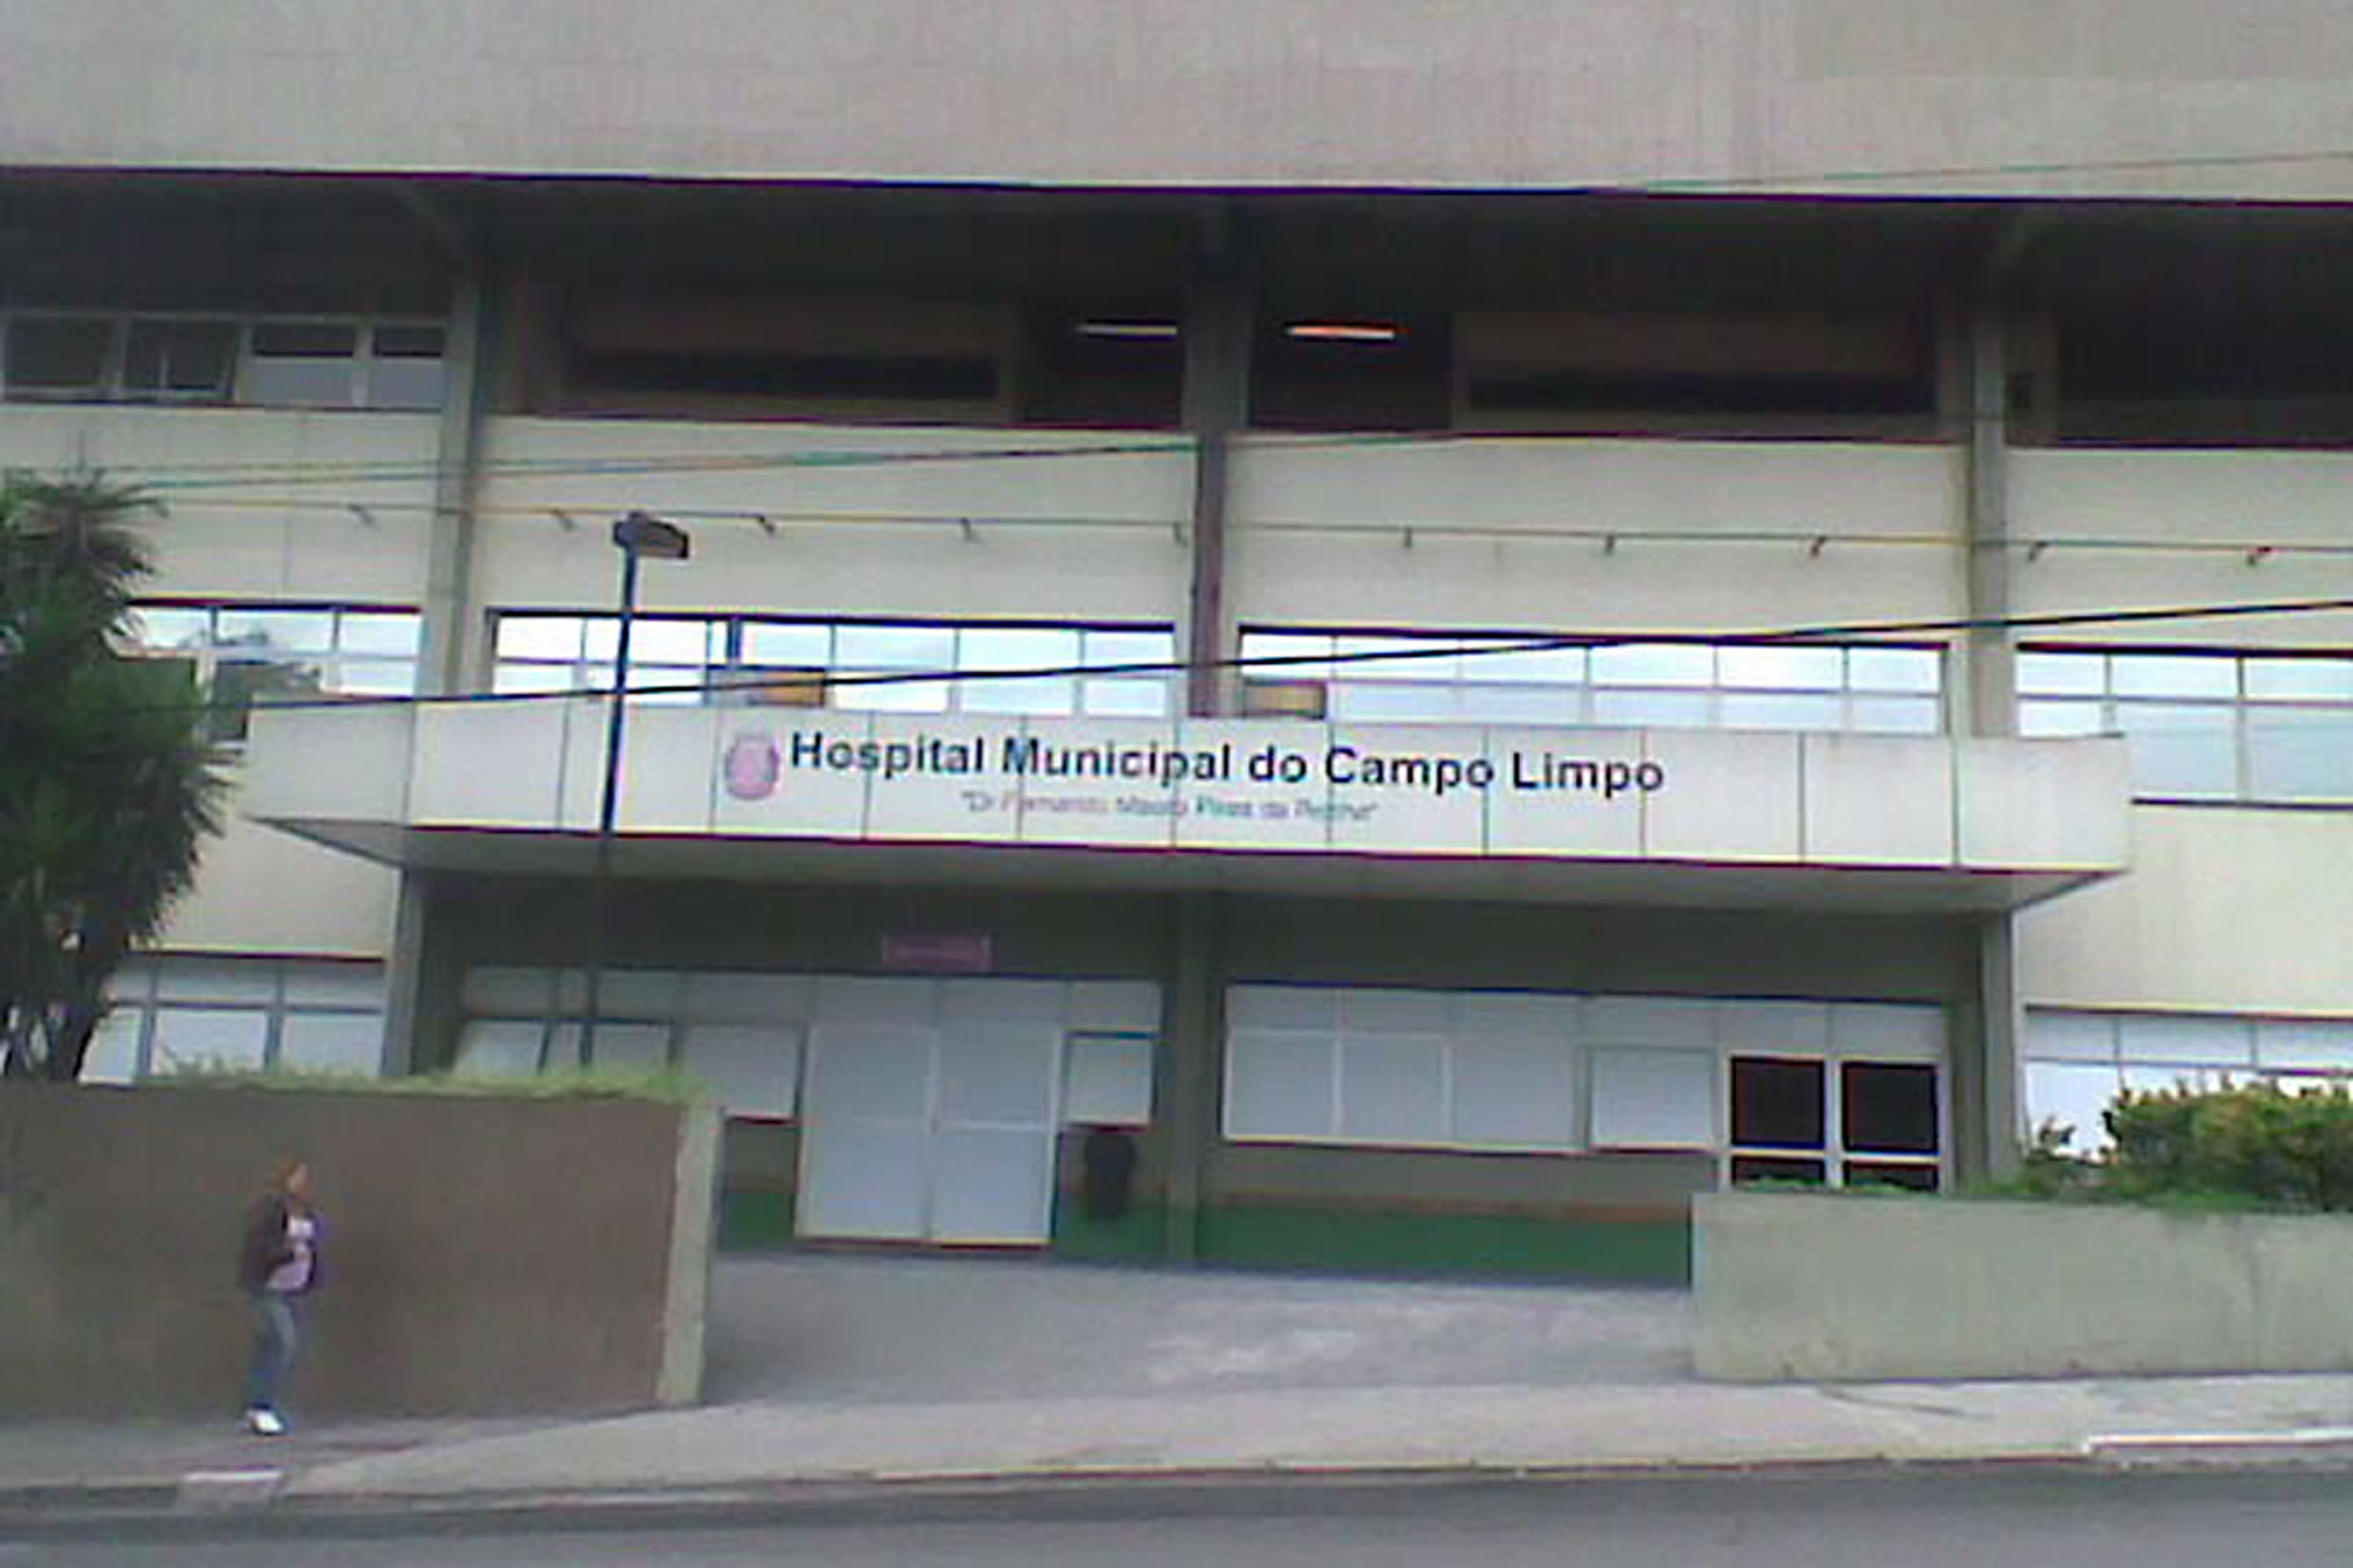 Hospital Municipal do Campo Limpo <a style='float:right;color:#ccc' href='https://www3.al.sp.gov.br/repositorio/noticia/N-04-2015/fg169245.jpg' target=_blank><i class='bi bi-zoom-in'></i> Clique para ver a imagem </a>